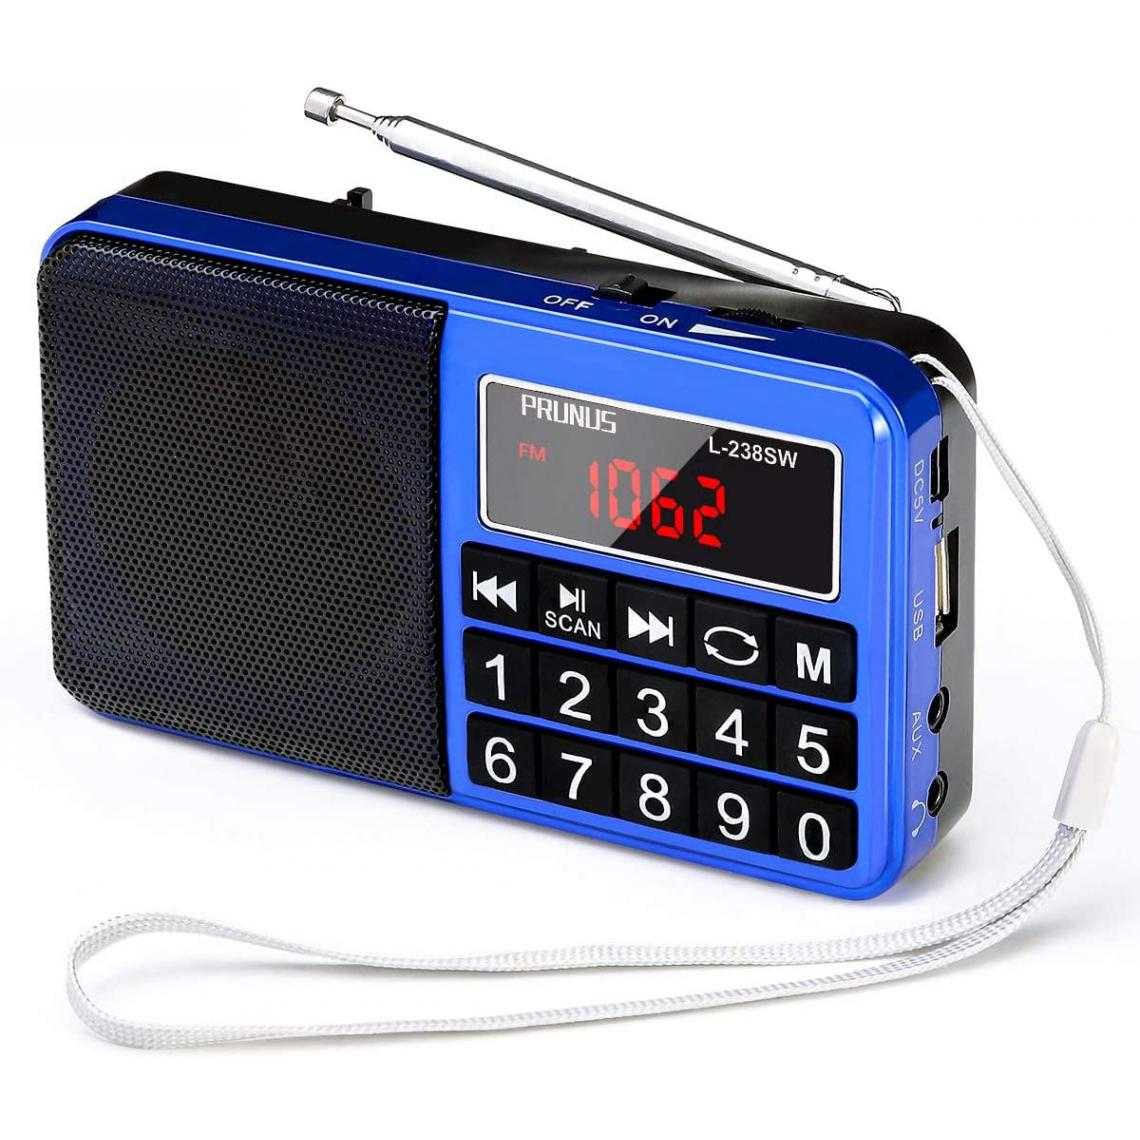 Prunus - radio portable FM AM (MW) SW USB Micro-SD MP3 avec batterie rechargeable 1200 mAh noir bleu - Radio